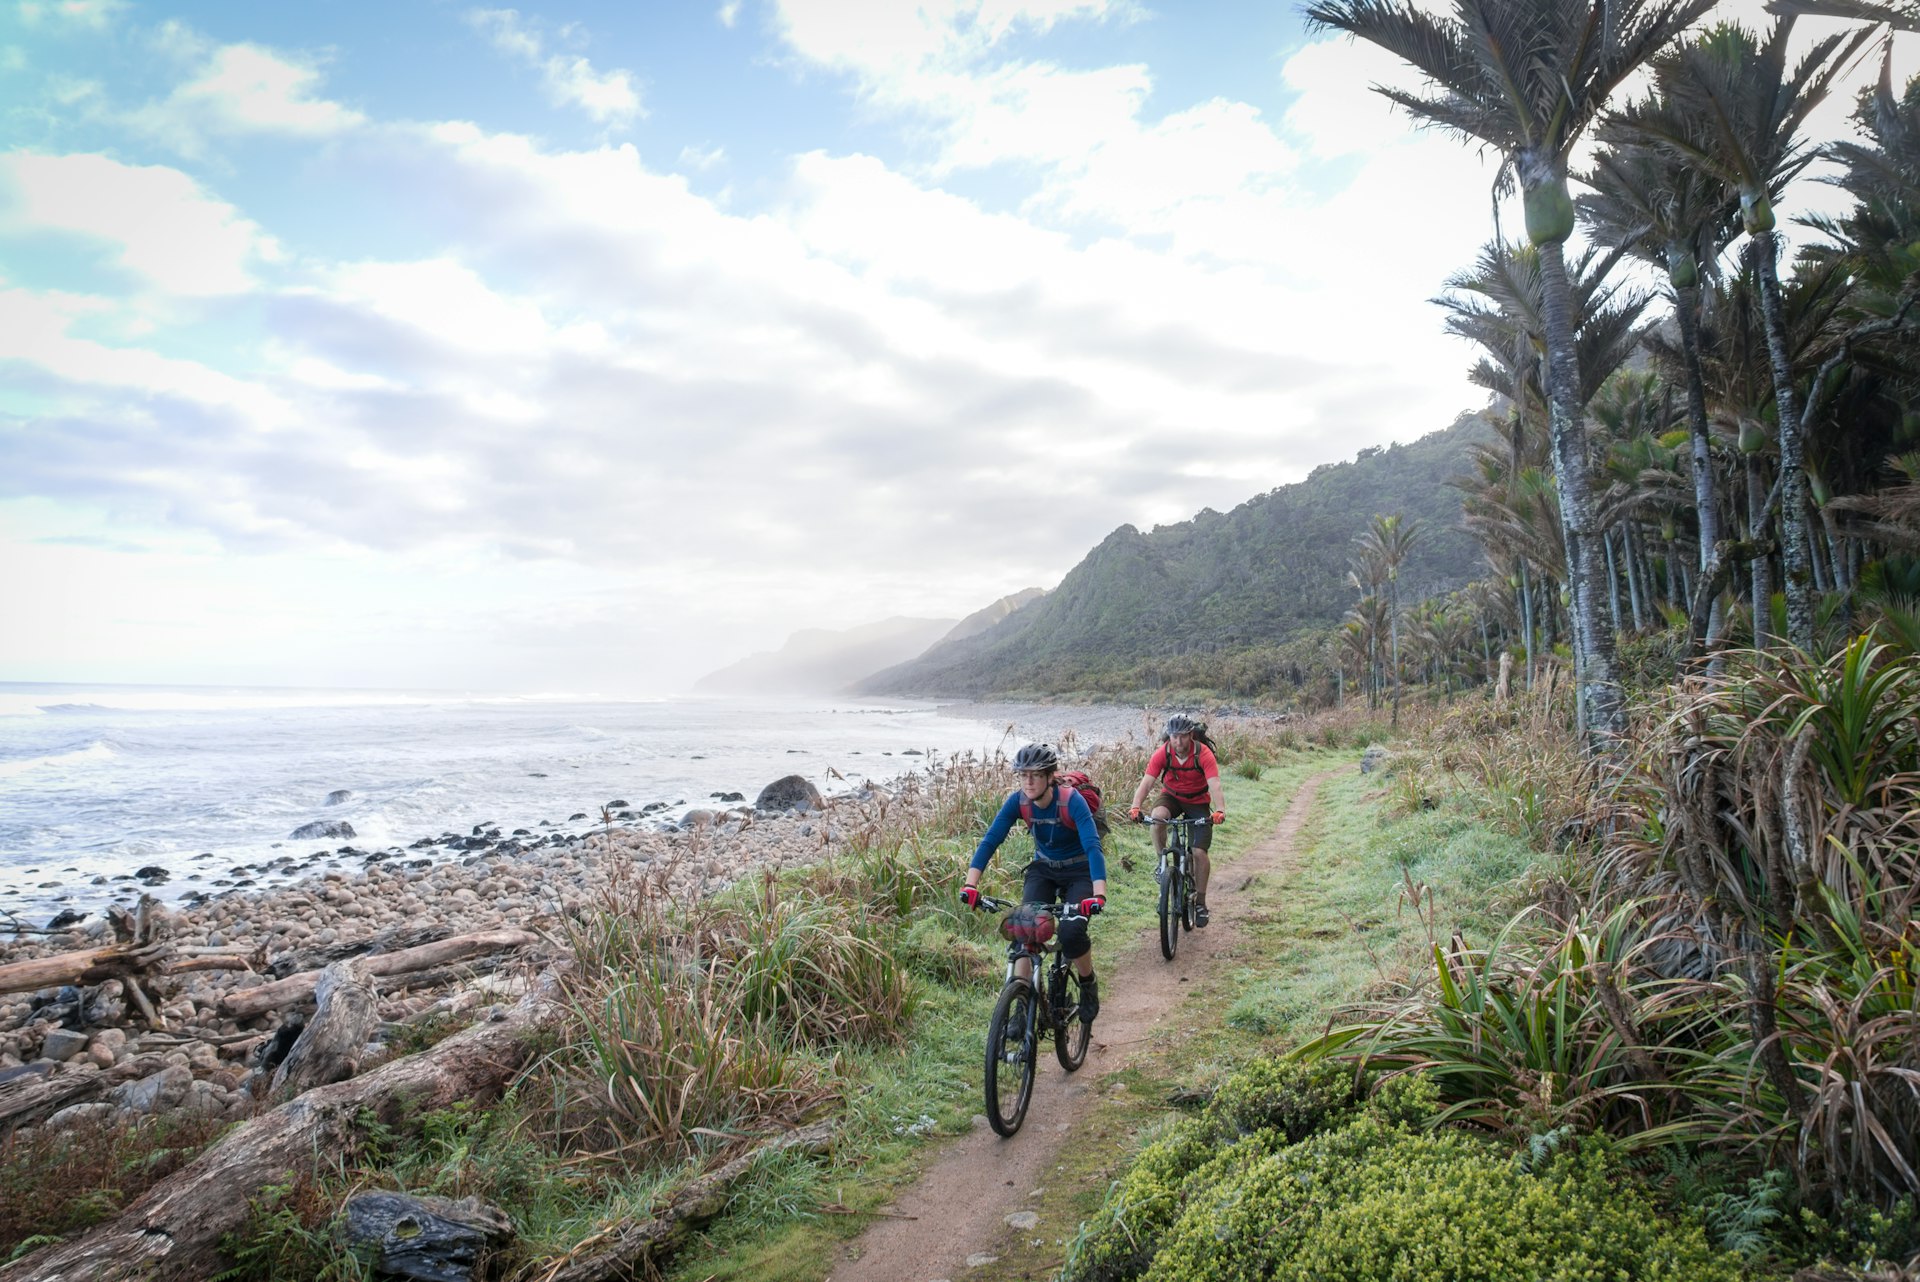 Two mountain-bikers ride along a coastal trail